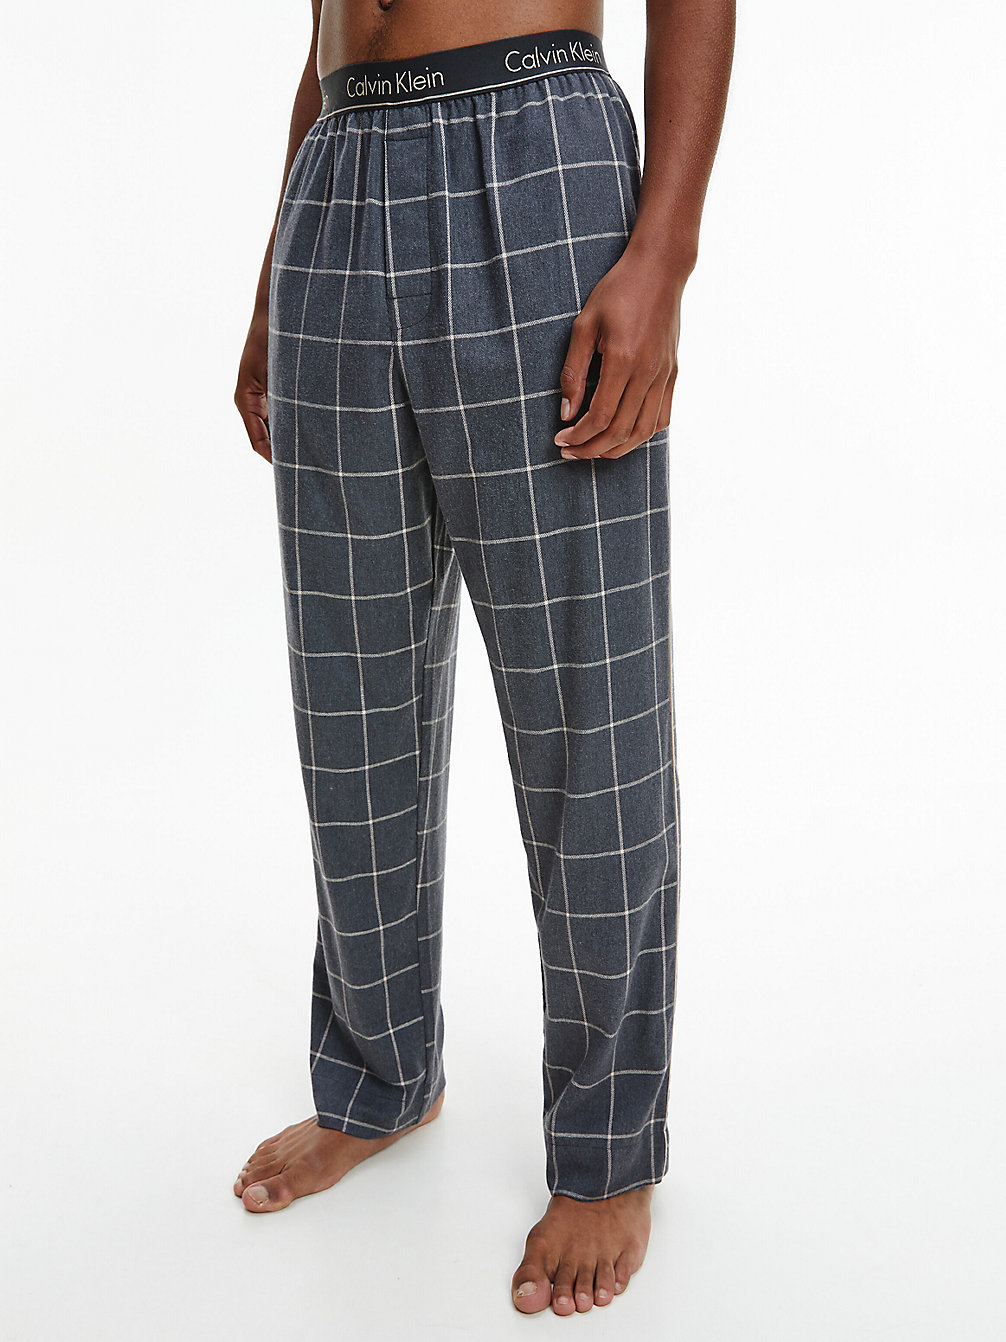 FLANNEL WINDOWPANE_CHARCOAL HEATHER Flannel Pyjama Pants undefined men Calvin Klein